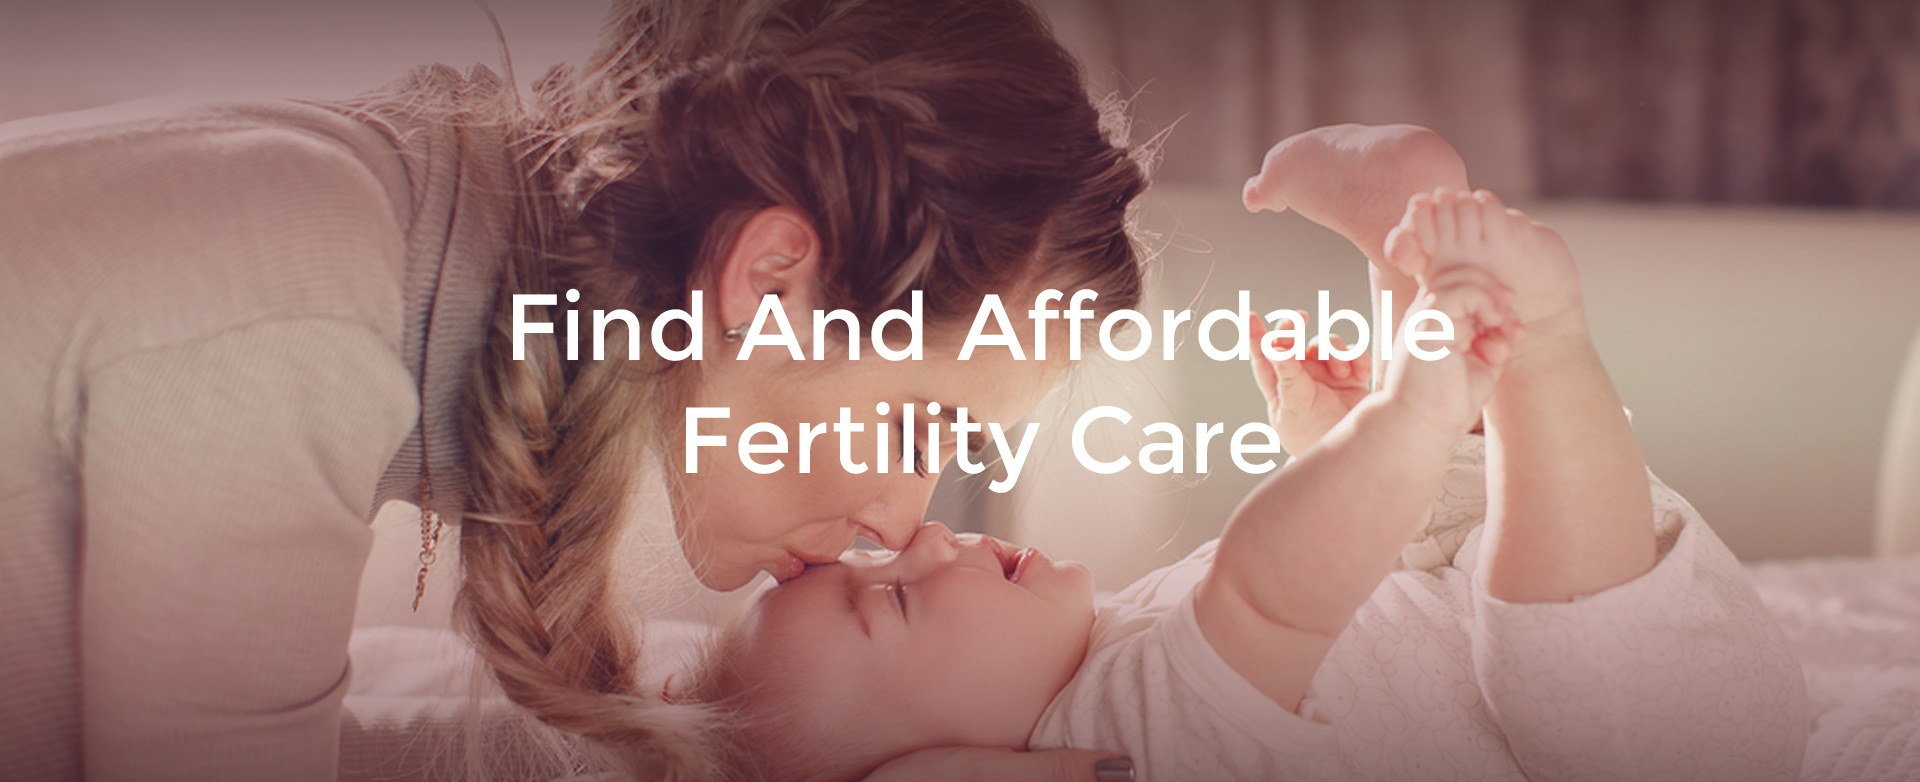 fertility care